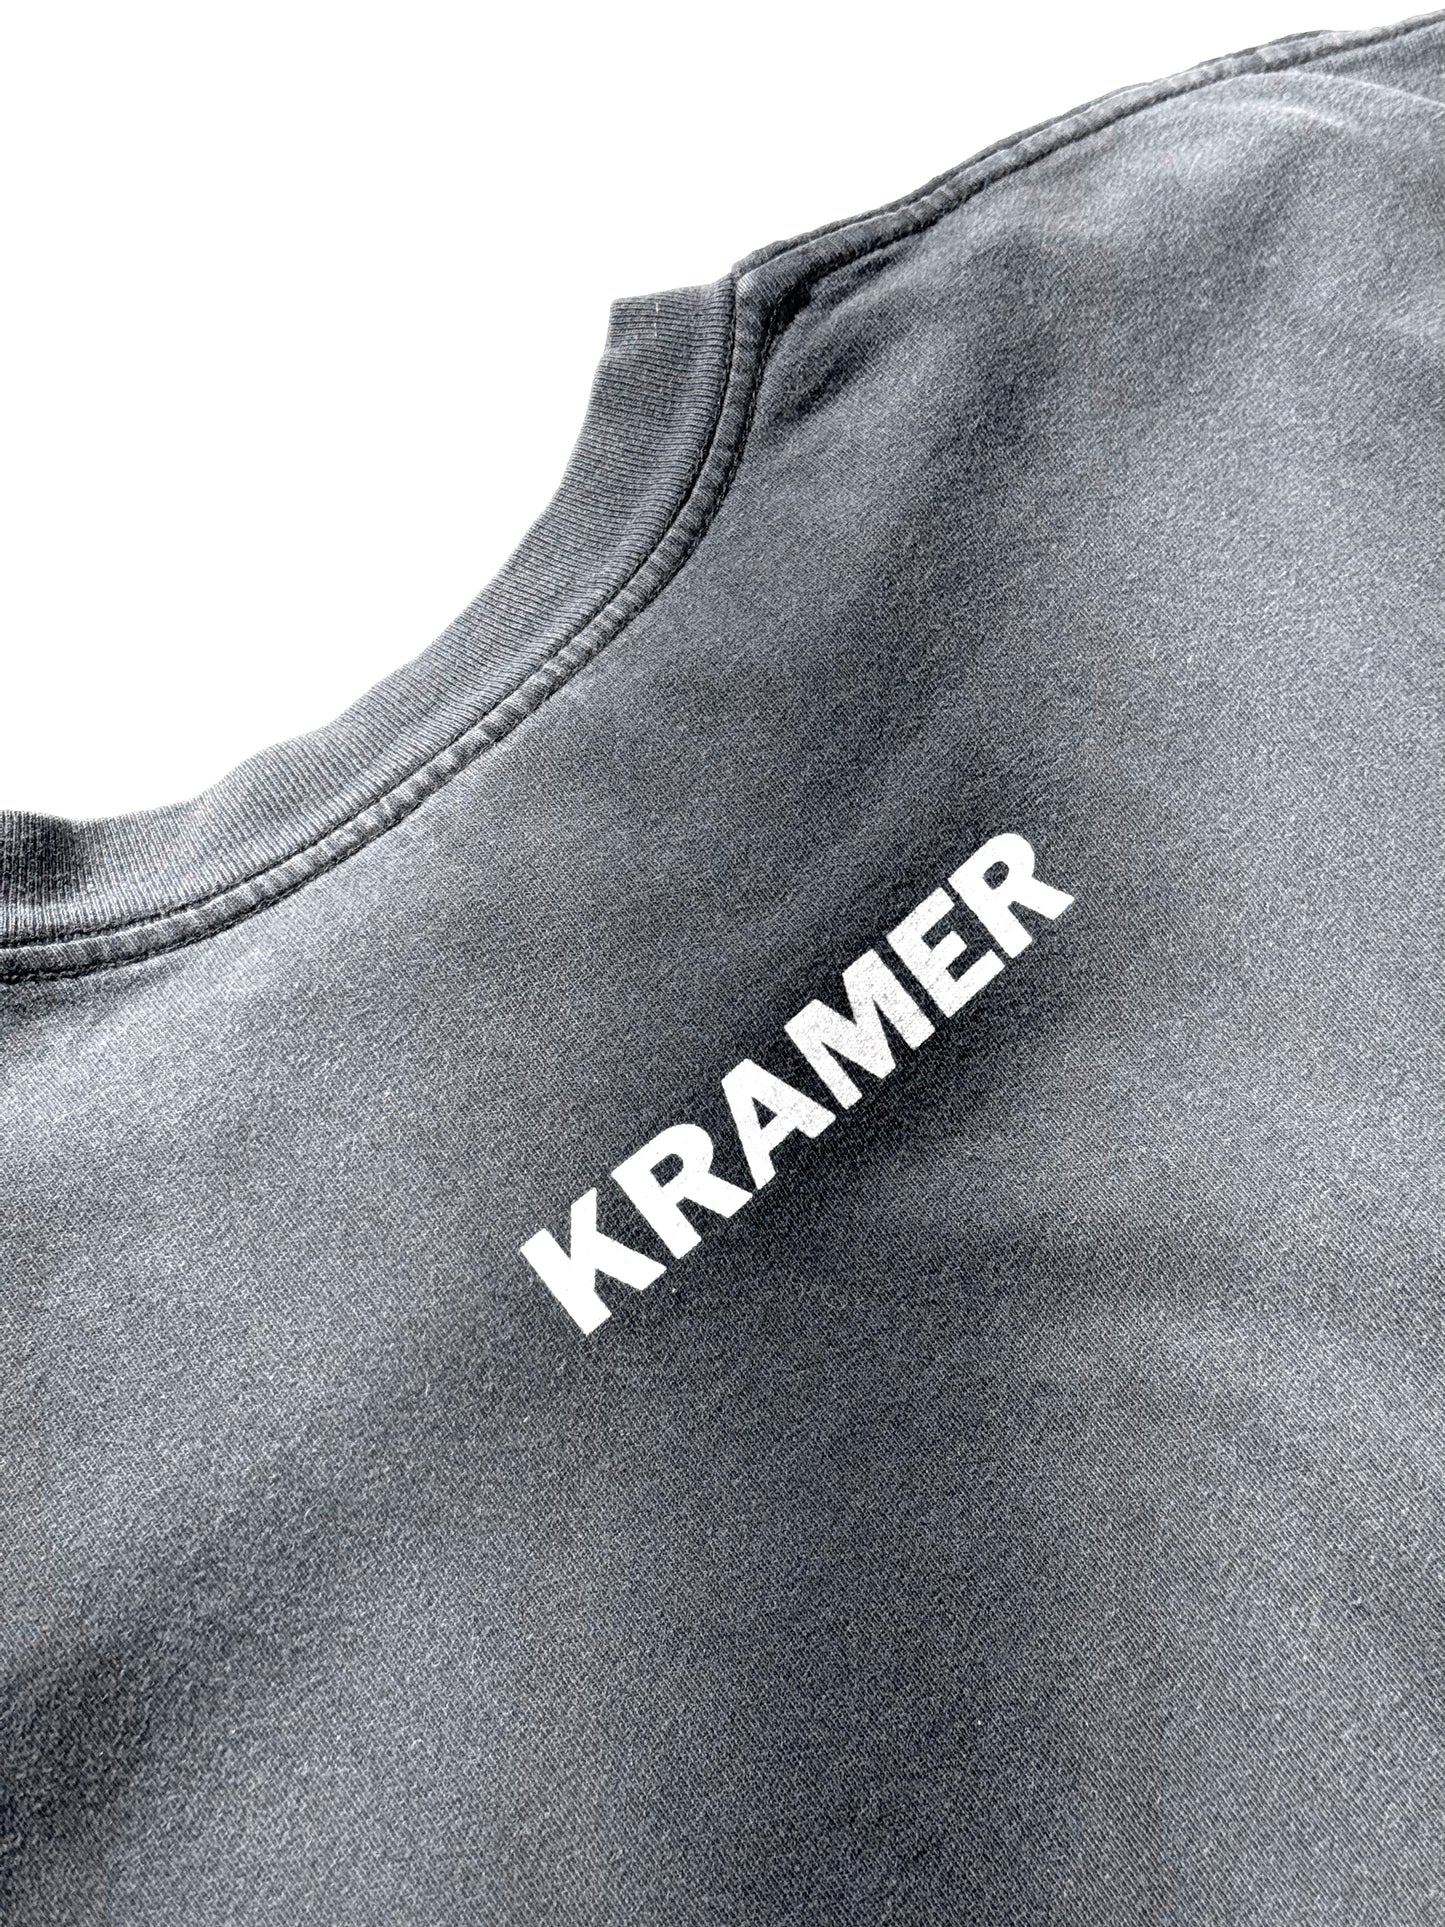 Vintage Kramer T-Shirt Seinfeld Rare Faded Black 90's USA Made XL